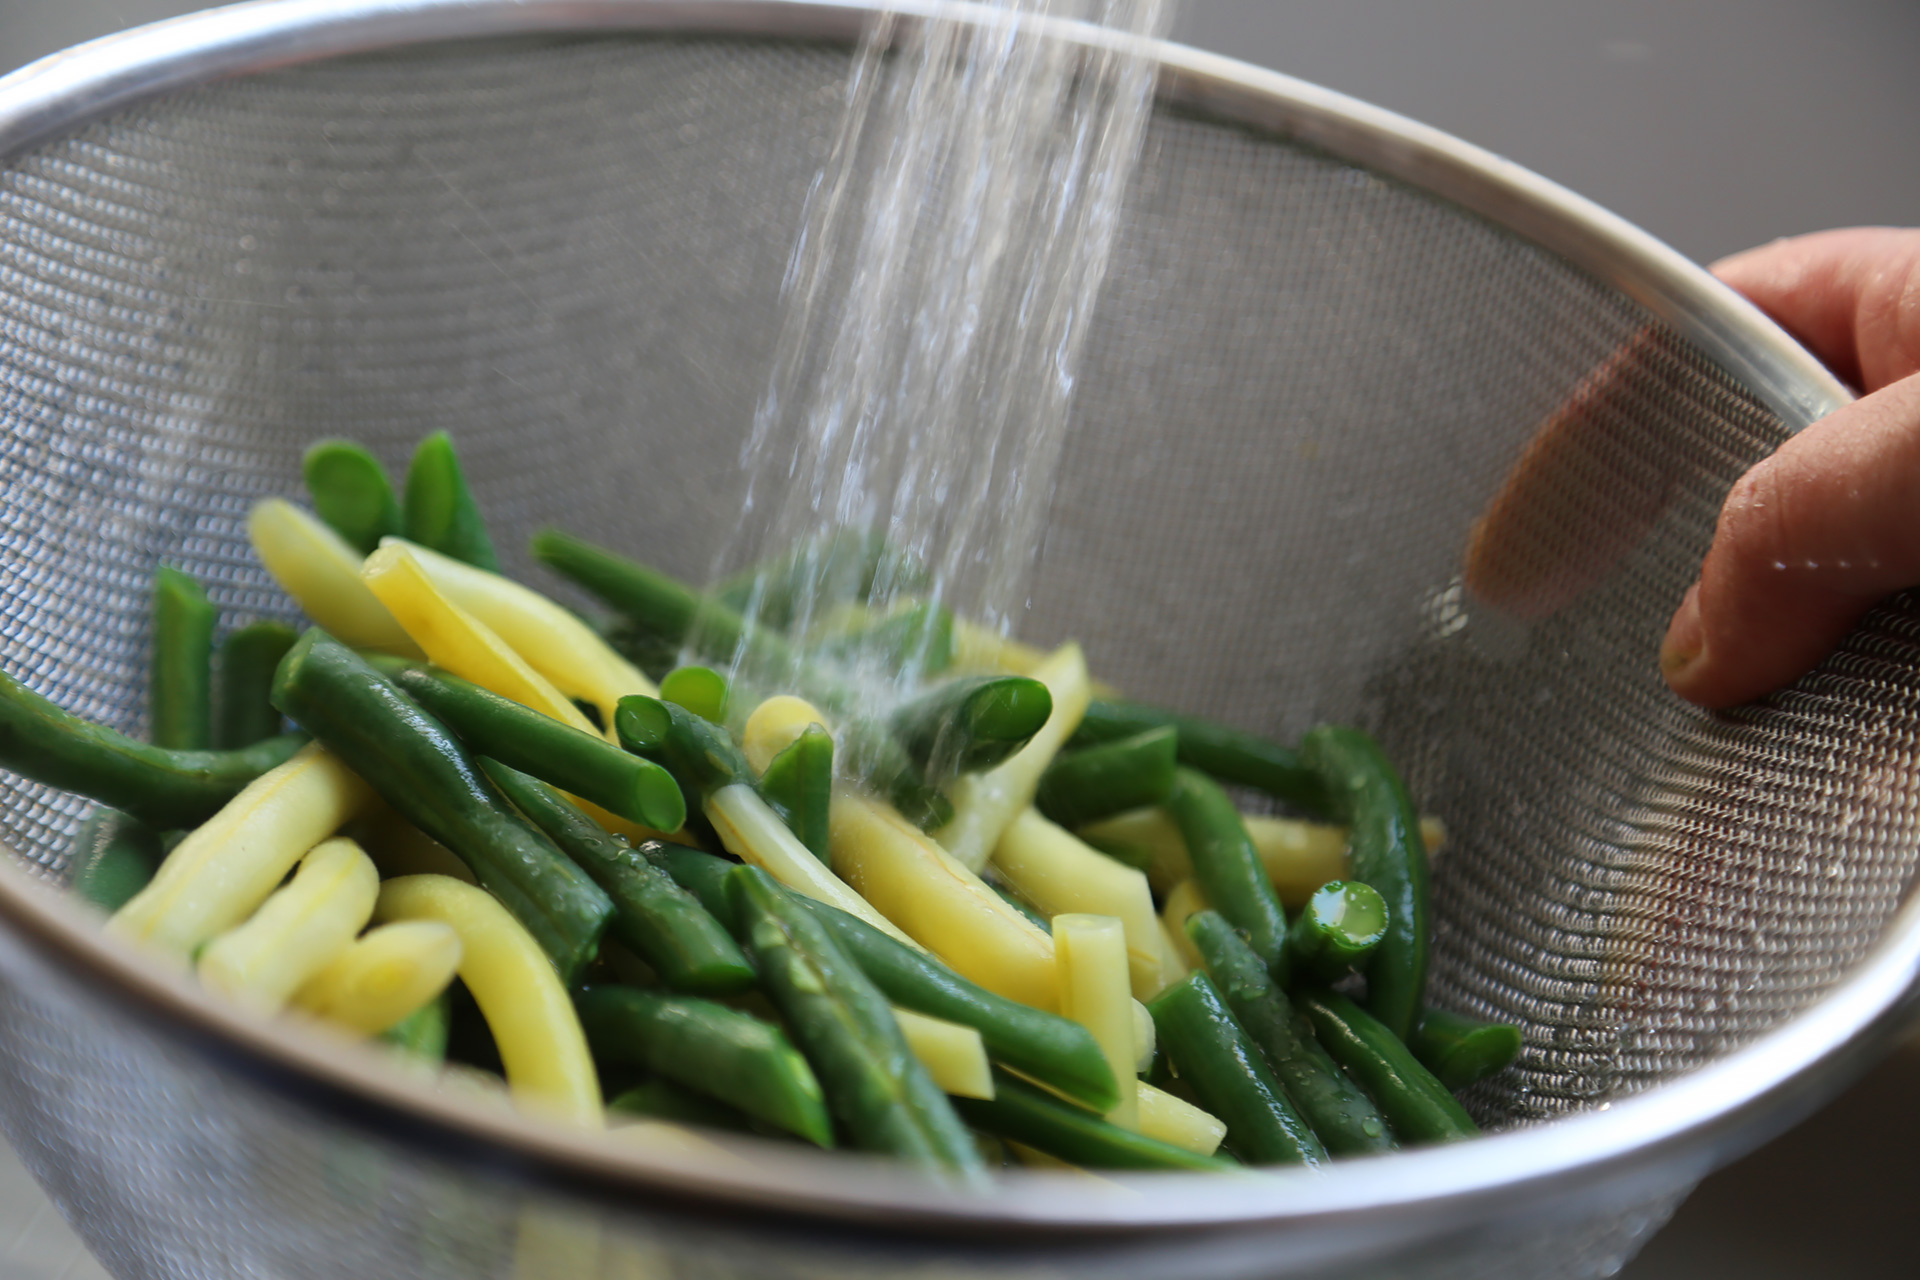 Cook green beans until just crisp-tender, then drain in a colander.